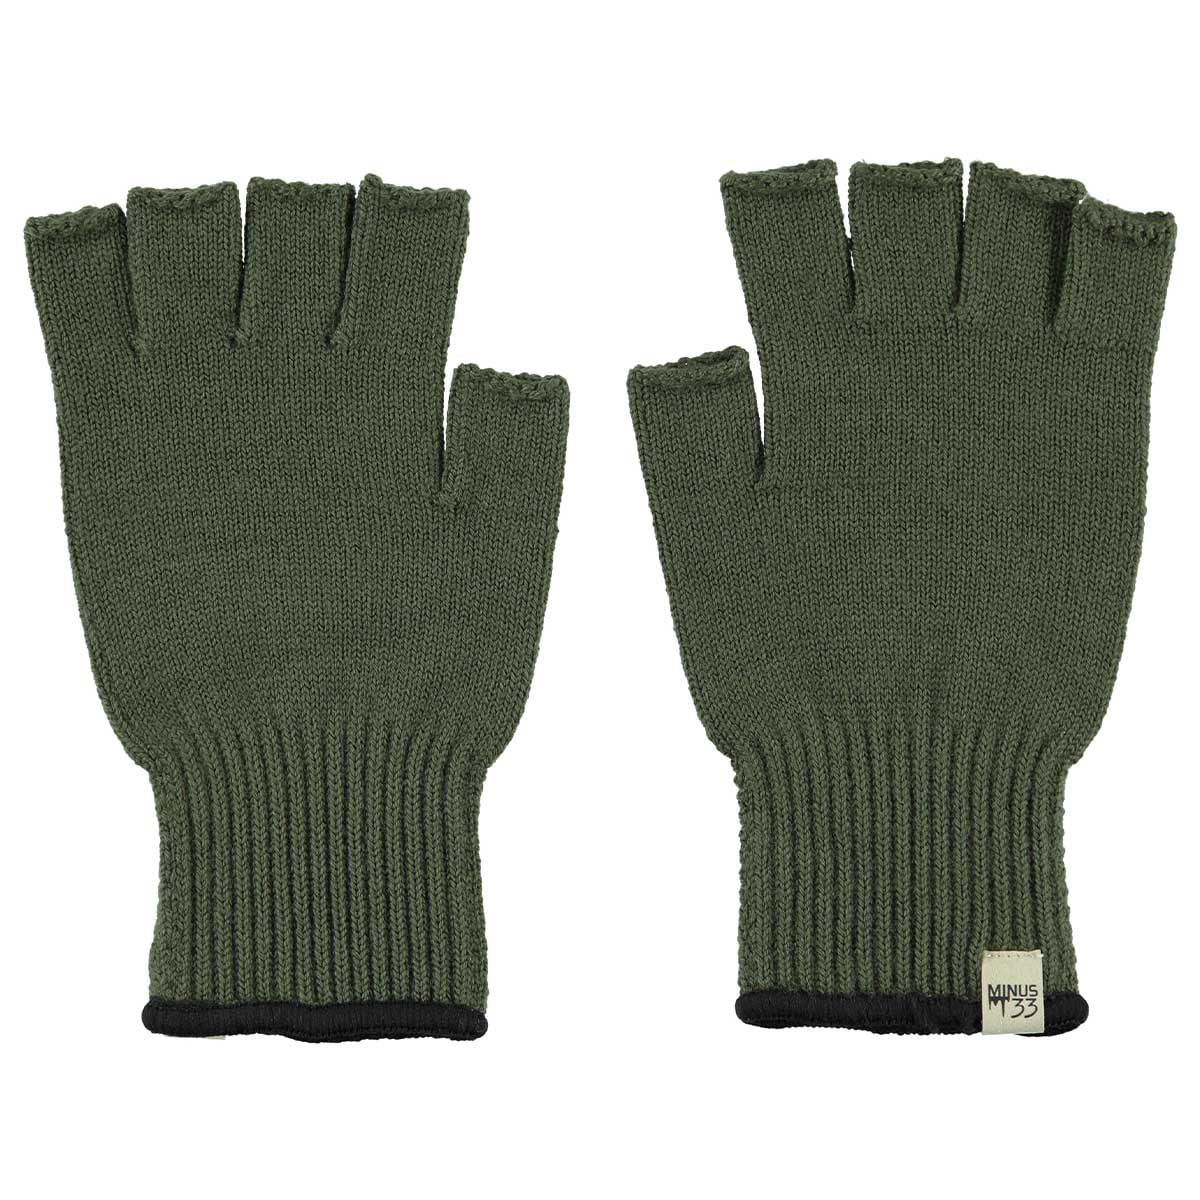 Accessories Gloves & Mittens Winter Gloves grey tweed fingerless gloves for a man 